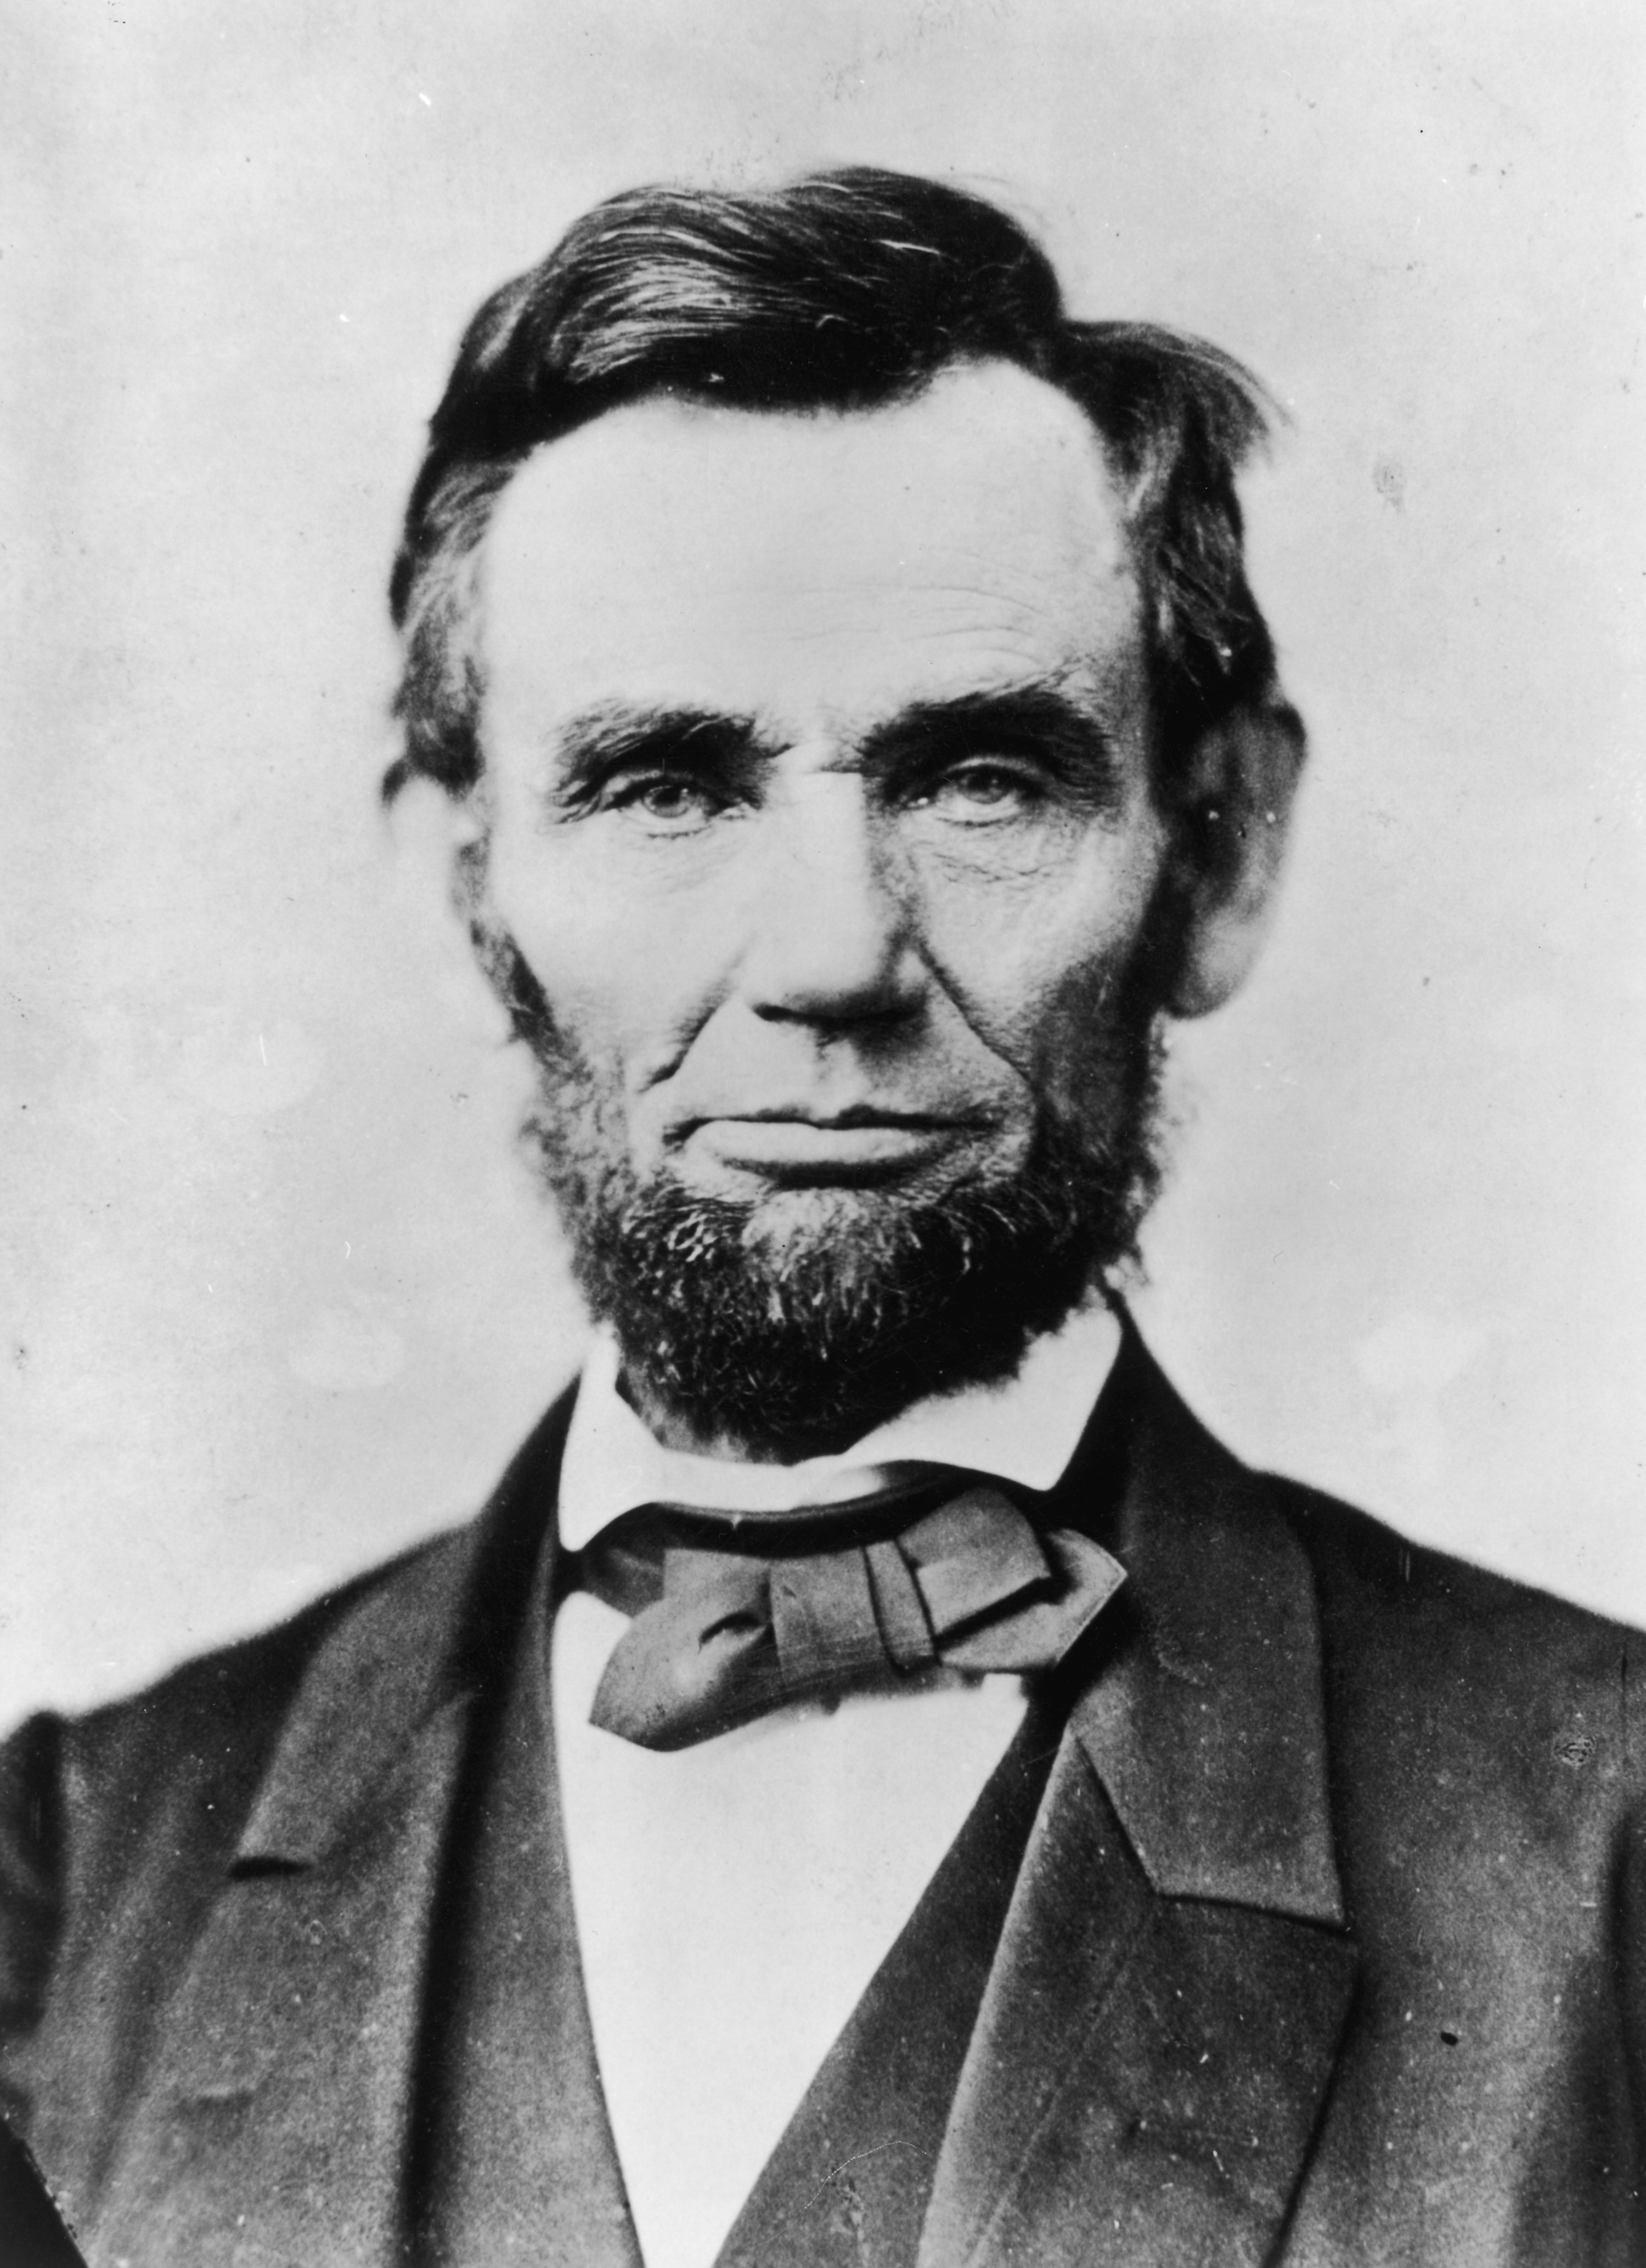 Black-and-white portrait of Abraham Lincoln